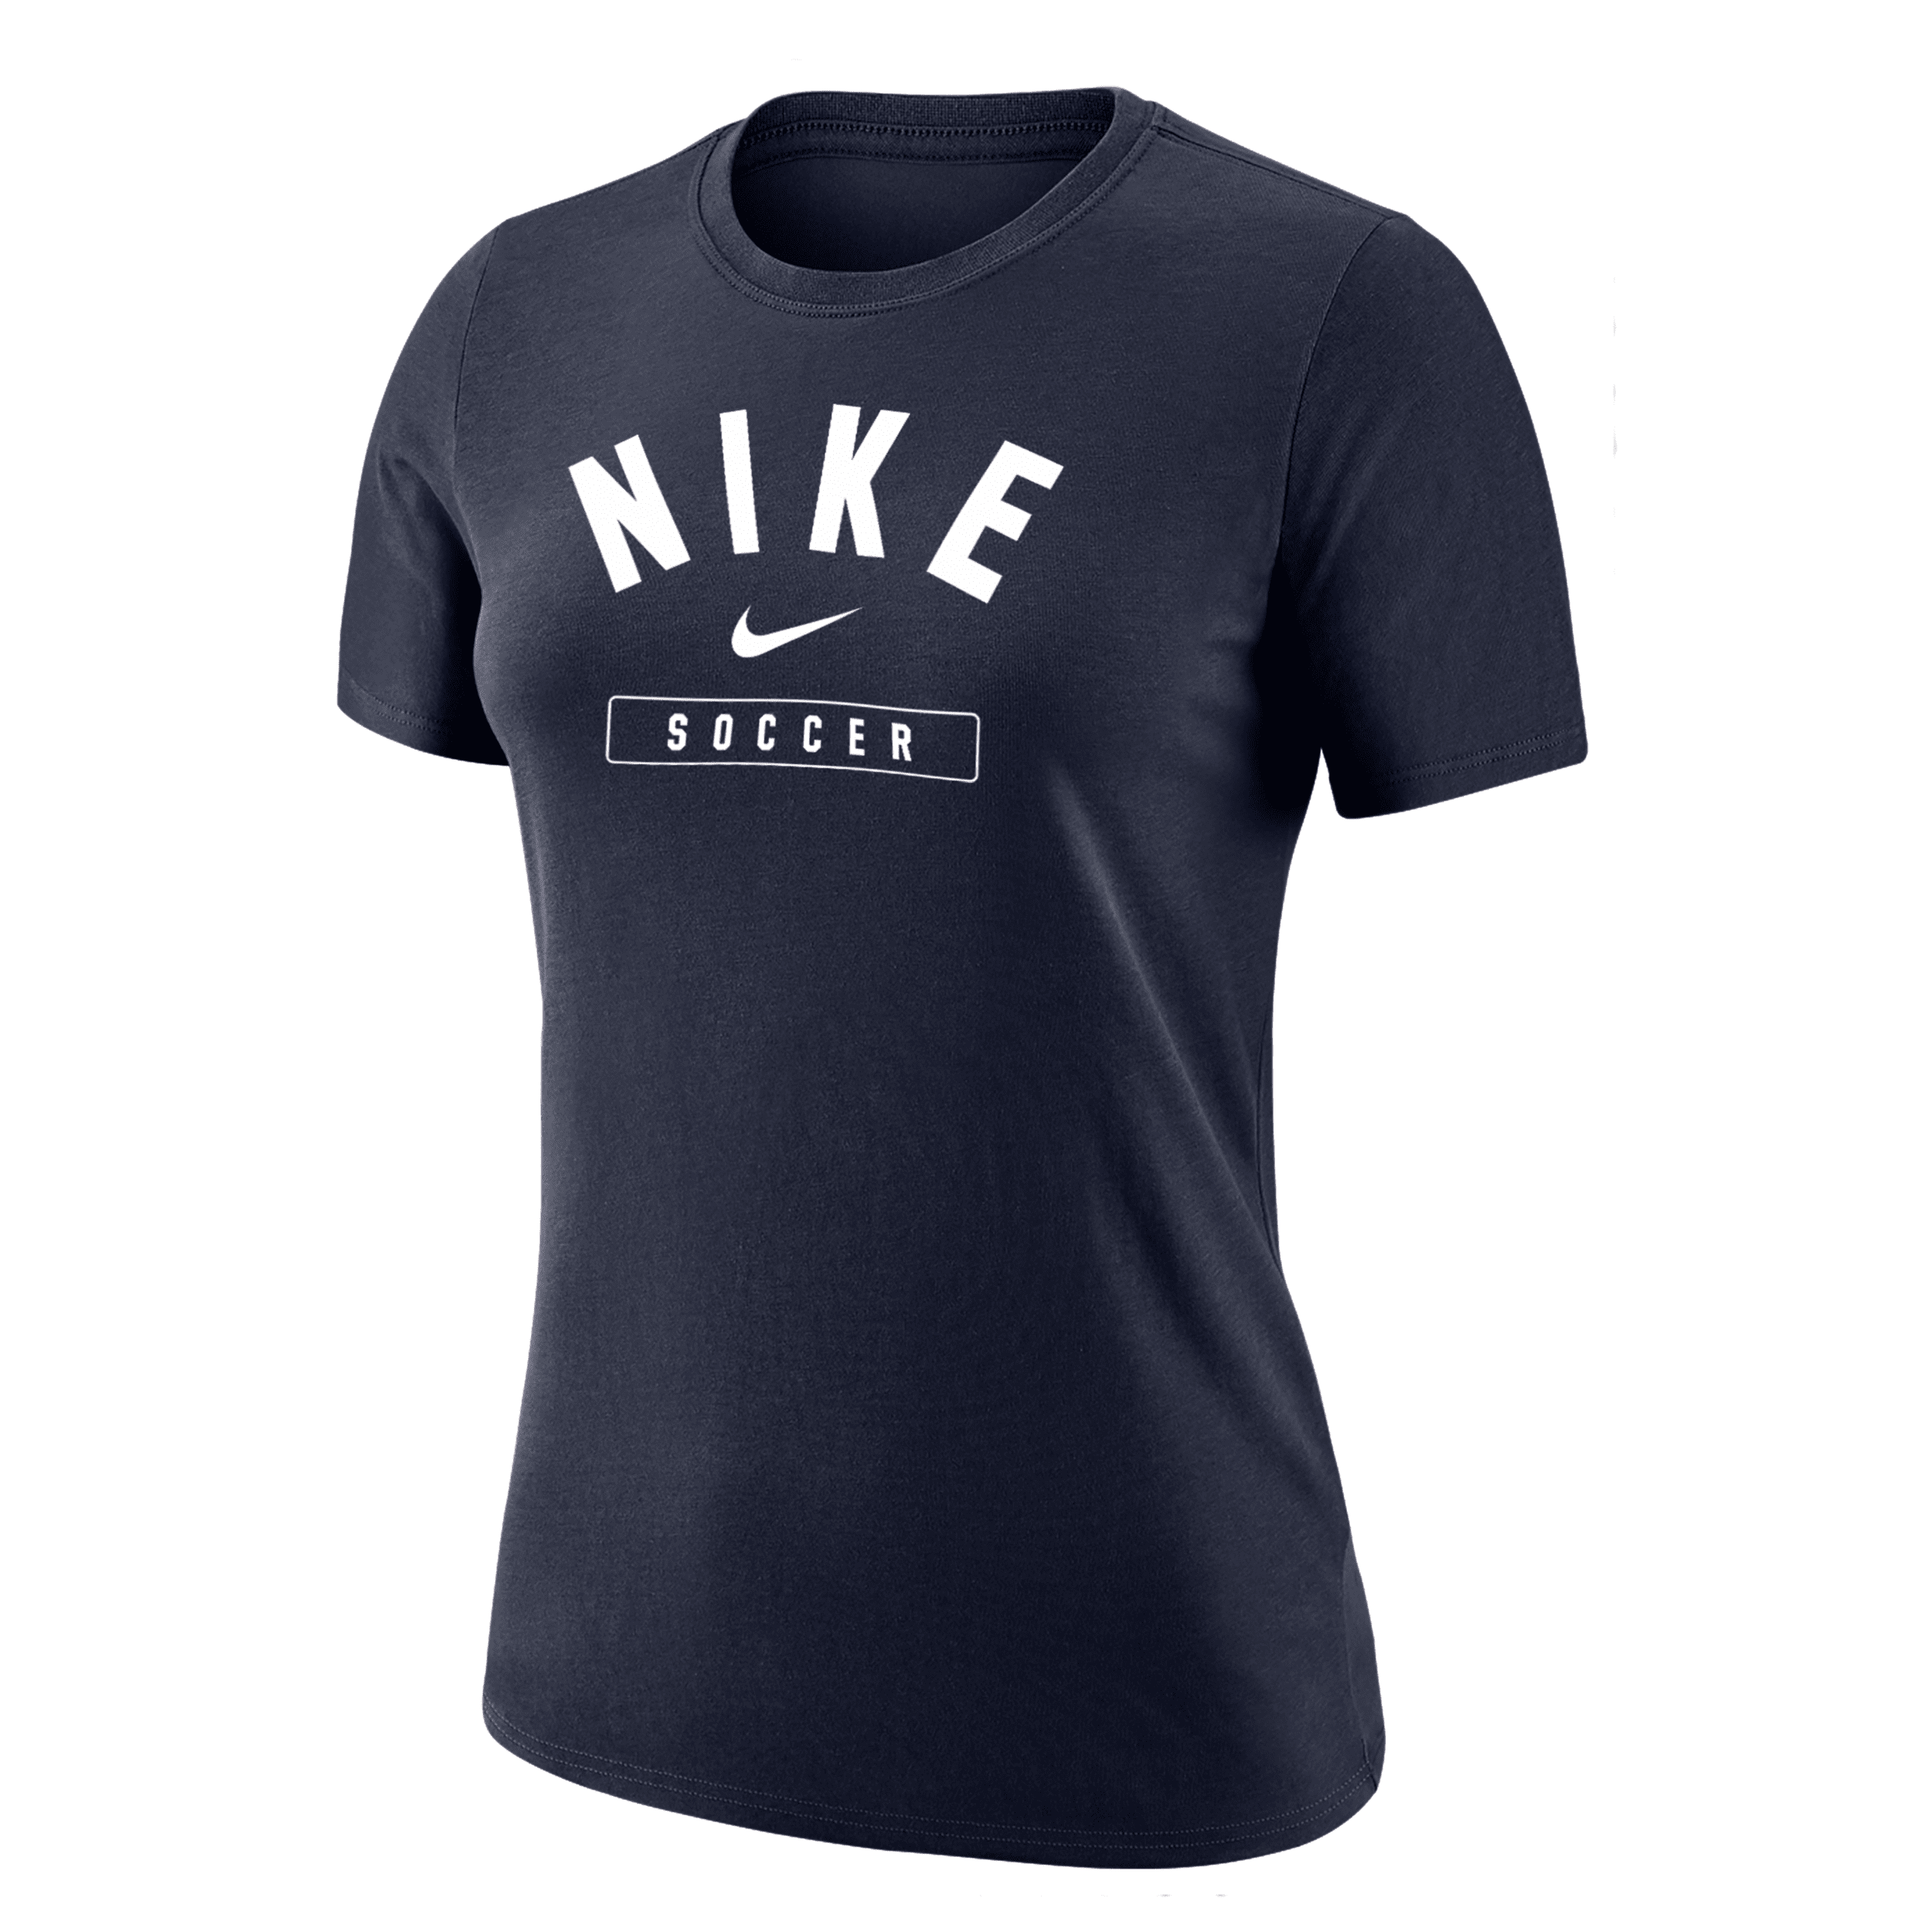 Nike Women's Swoosh Soccer T-shirt In Blue